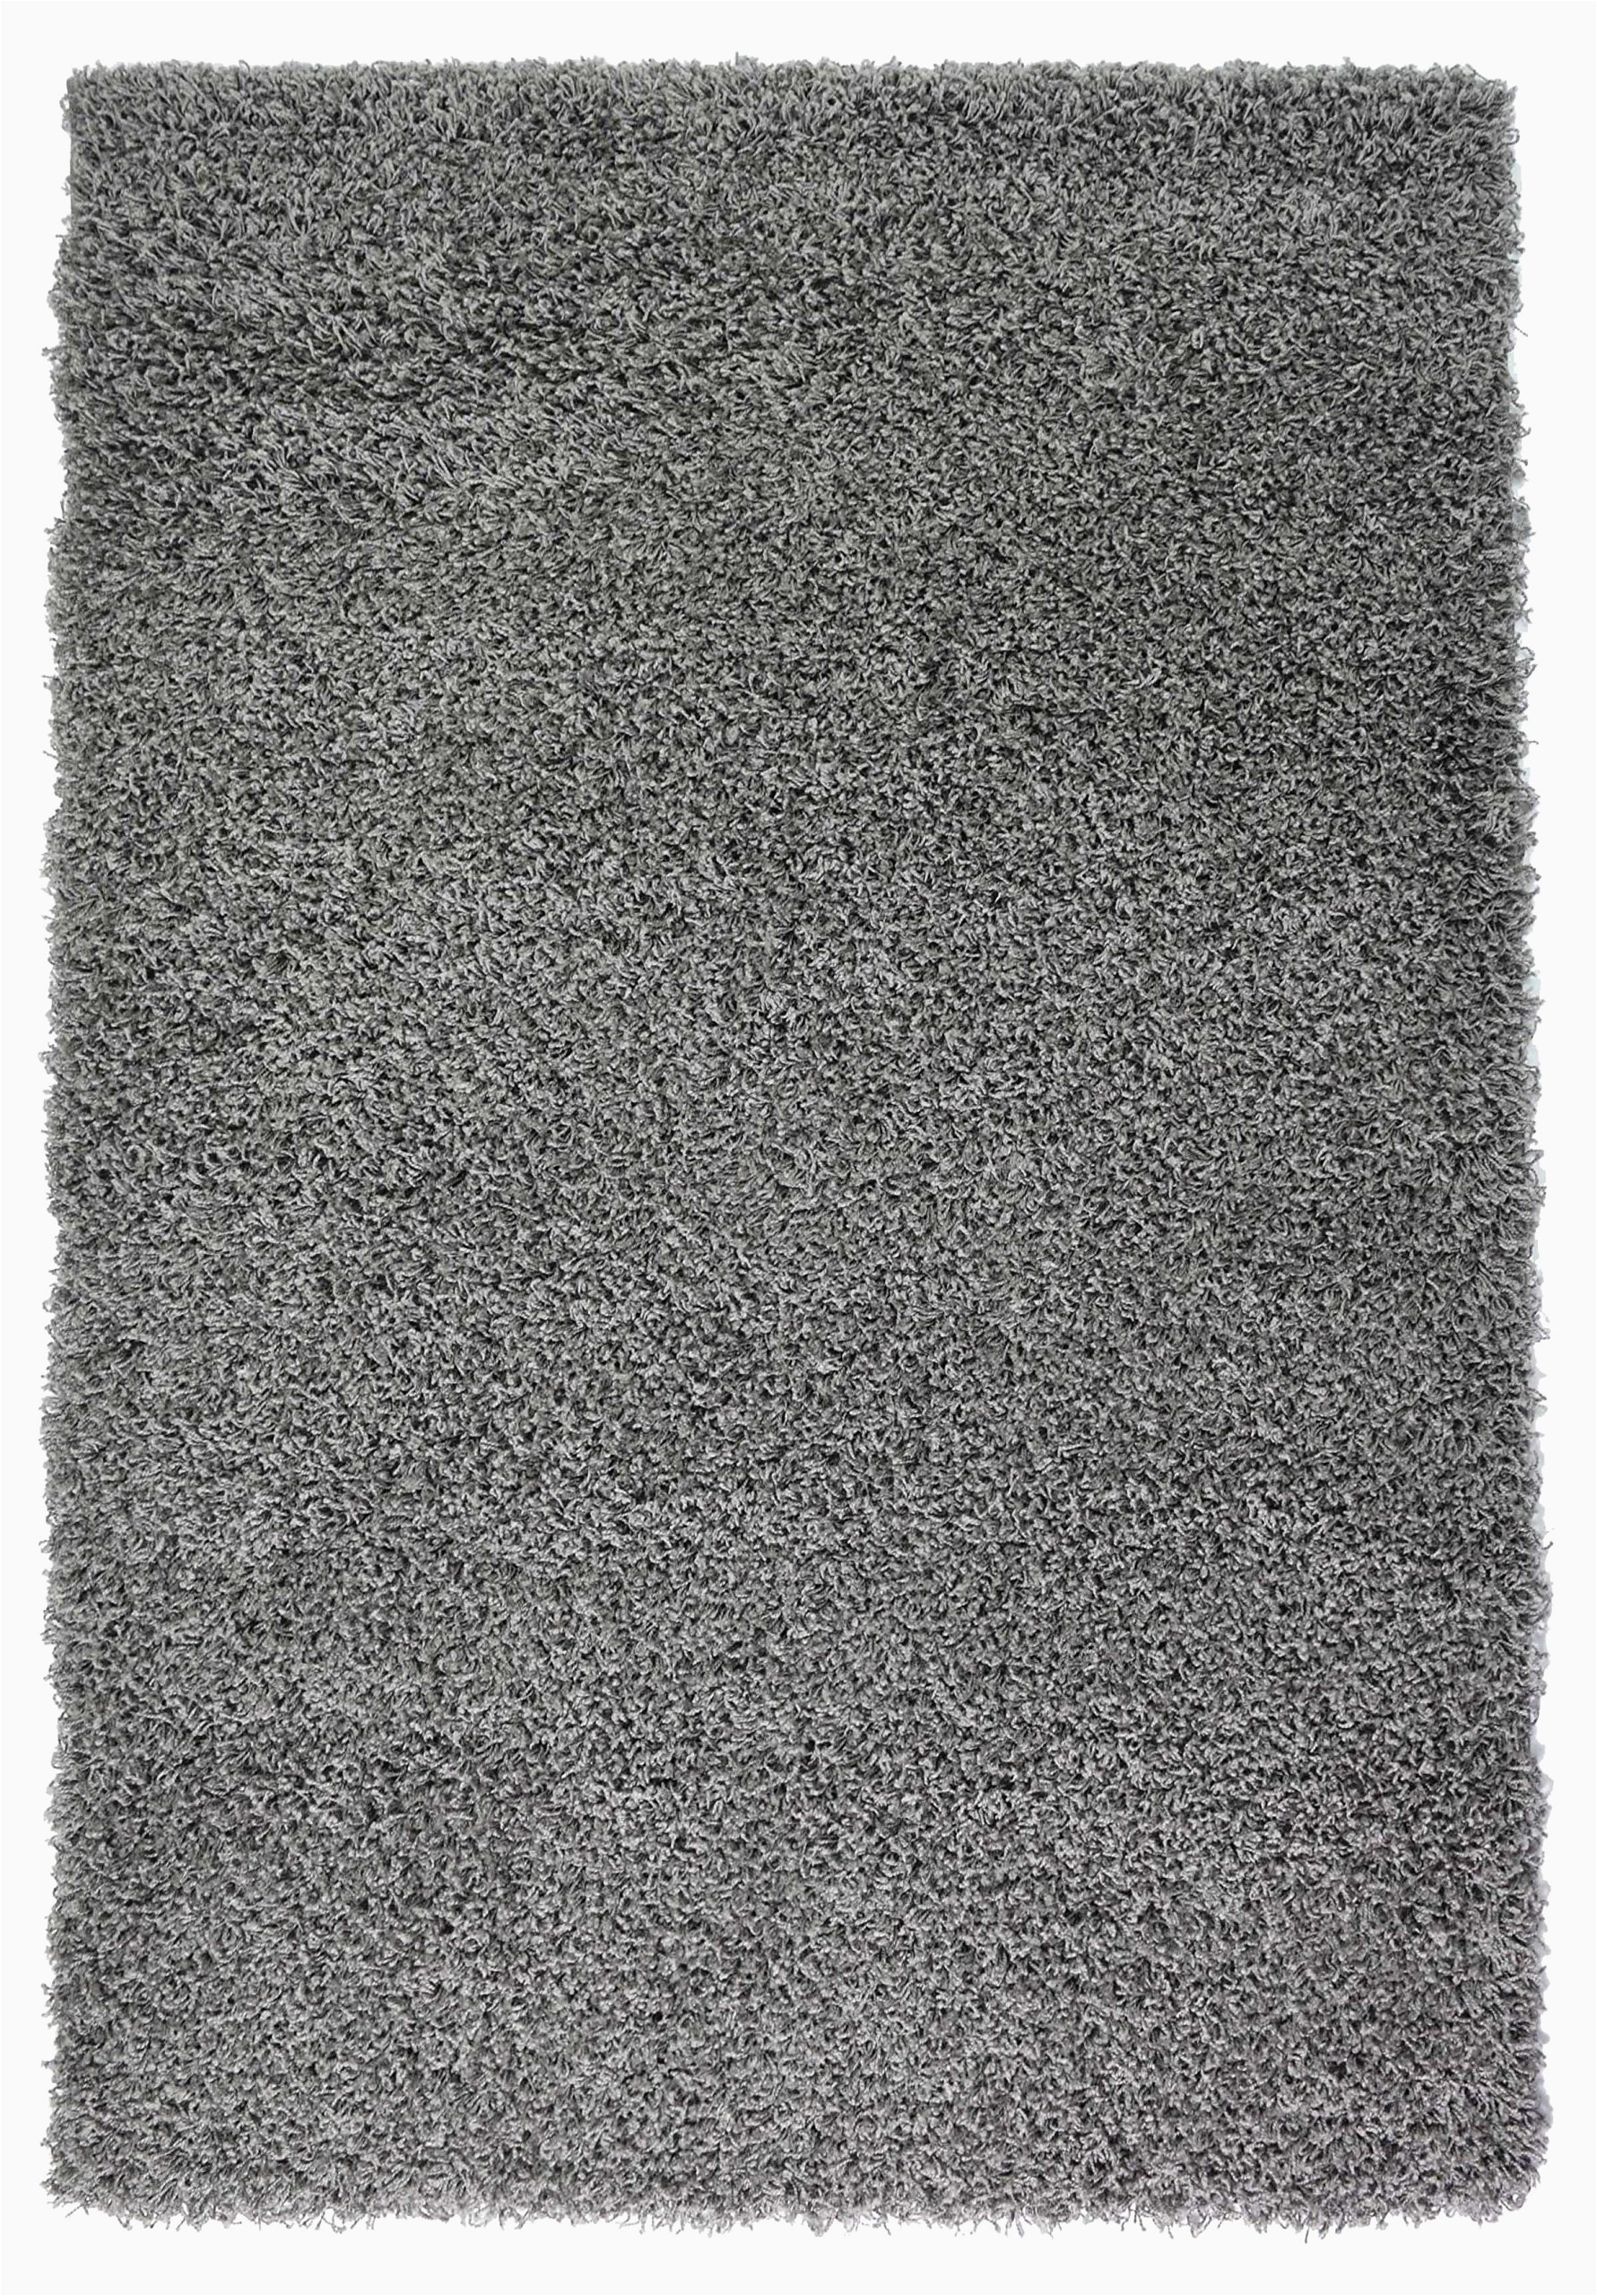 extra large rug 5cm thick shag pile soft shaggy area rugs modern carpet living room bedroom mats 160x230cm 5 3 x7 7 dark grey